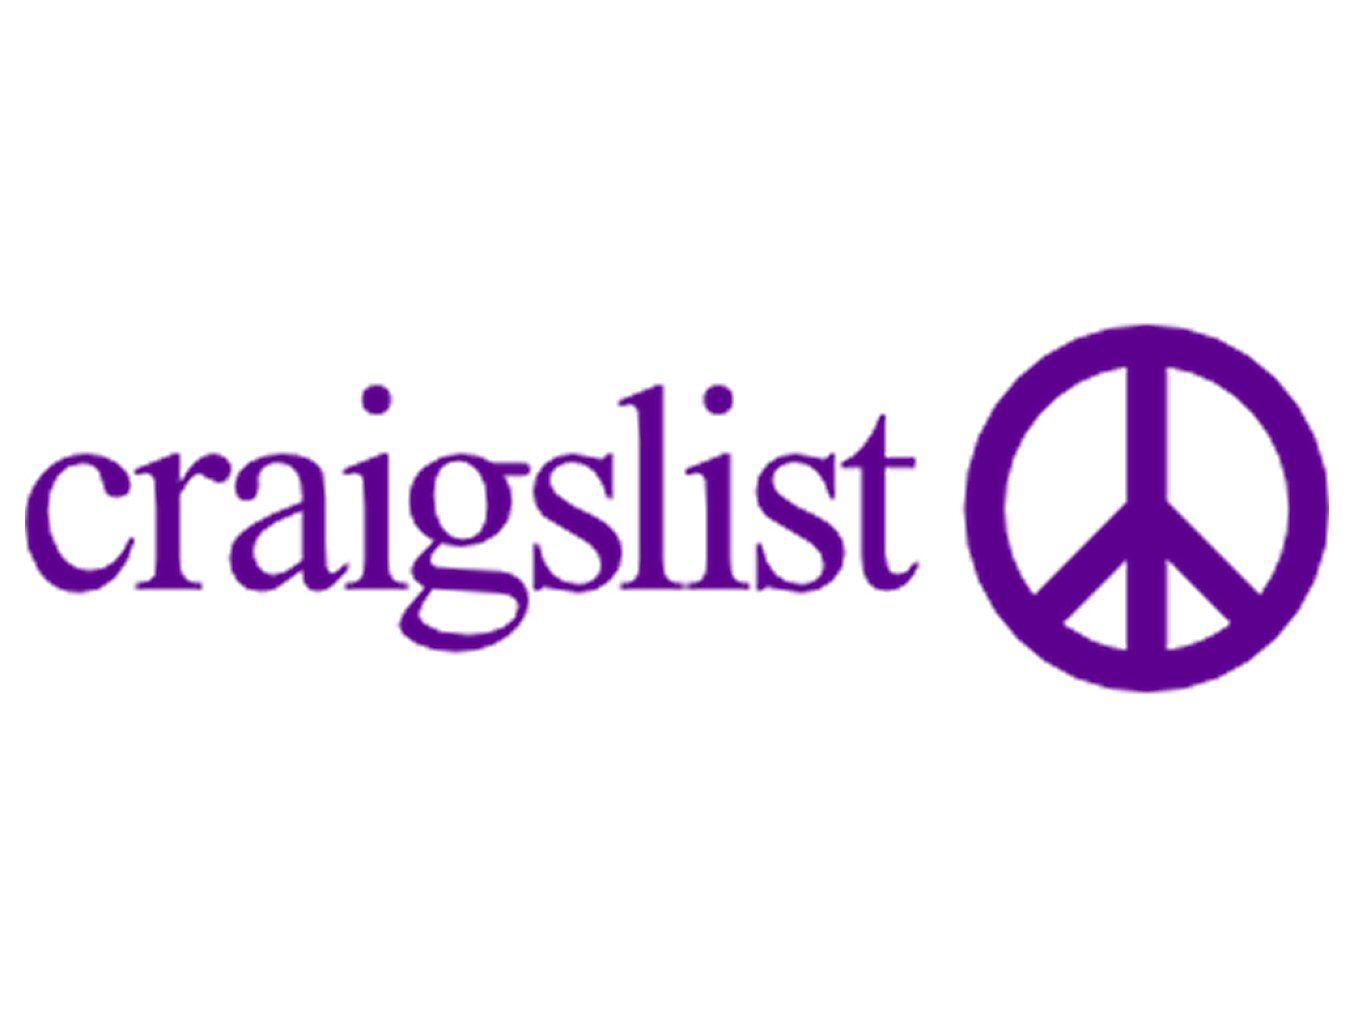 Official Craigslist Logo - Best Craigslist Apps - AptGadget.com